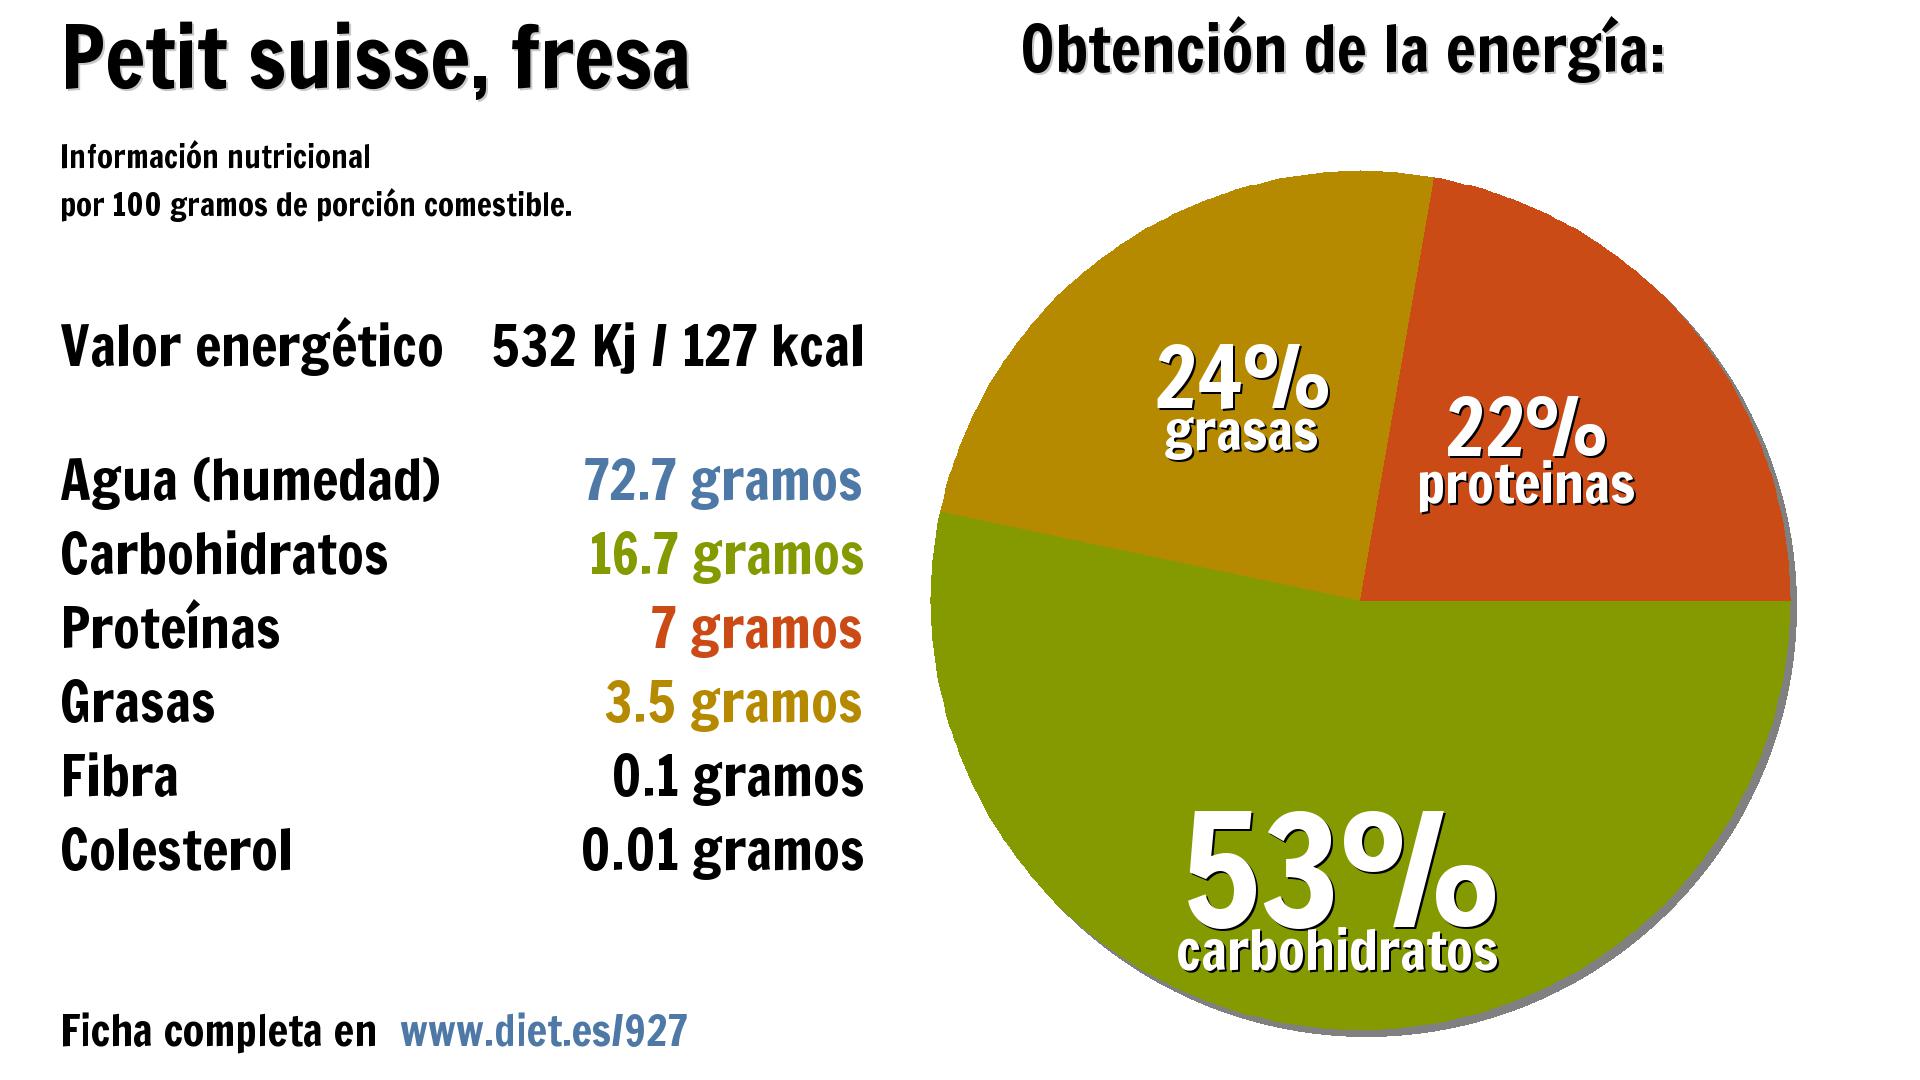 Petit suisse, fresa: energía 532 Kj, agua 73 g., carbohidratos 17 g., proteínas 7 g. y grasas 4 g.